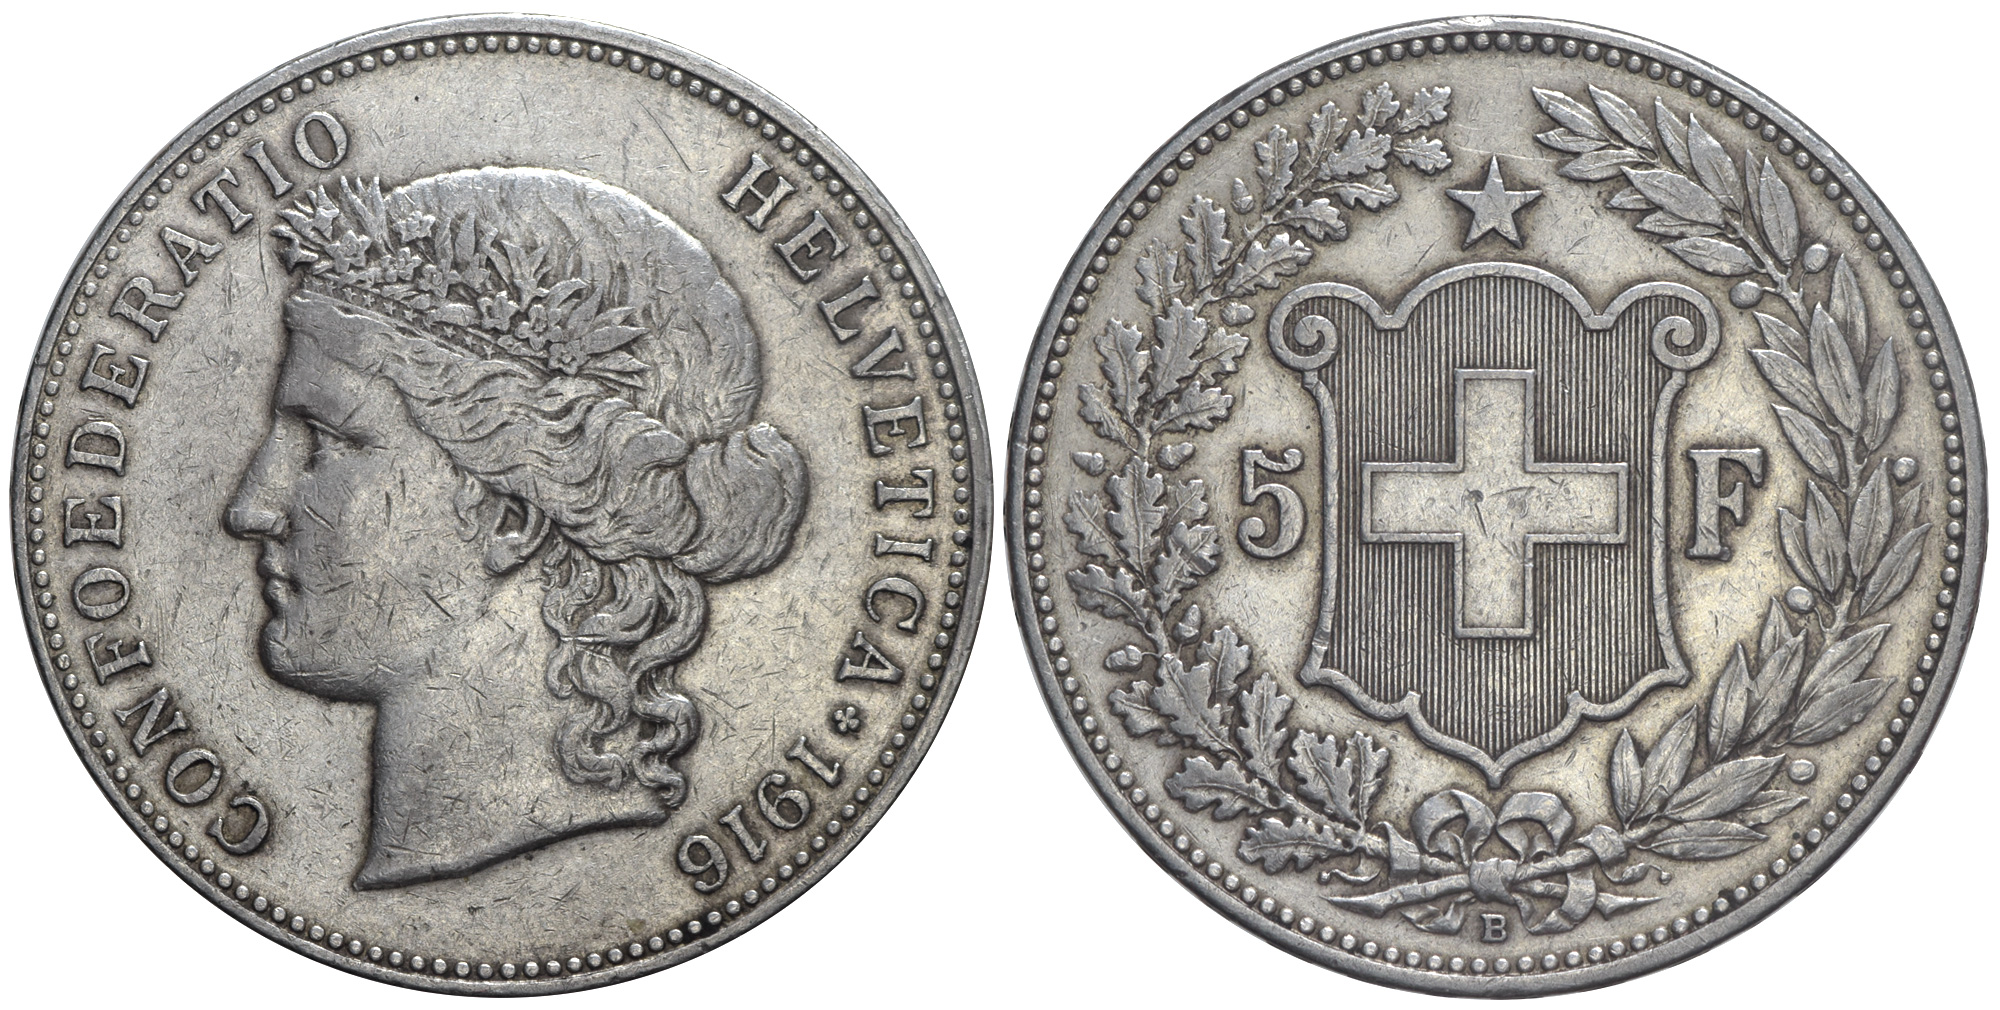 Switzerland Confoederatio Helvetica Francs 1916 